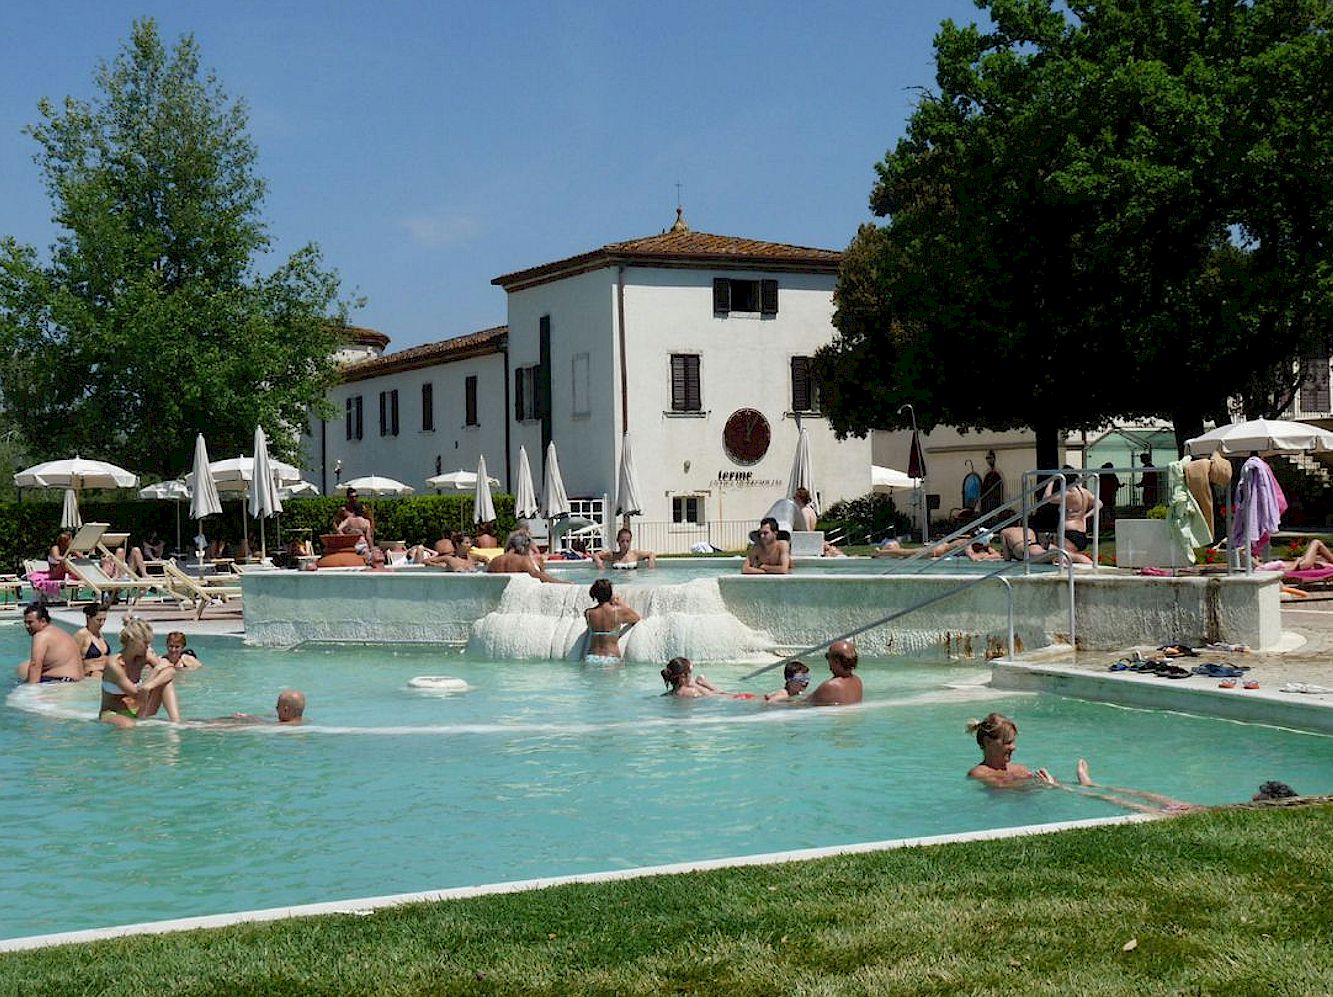 Rapolano Terme thermal baths